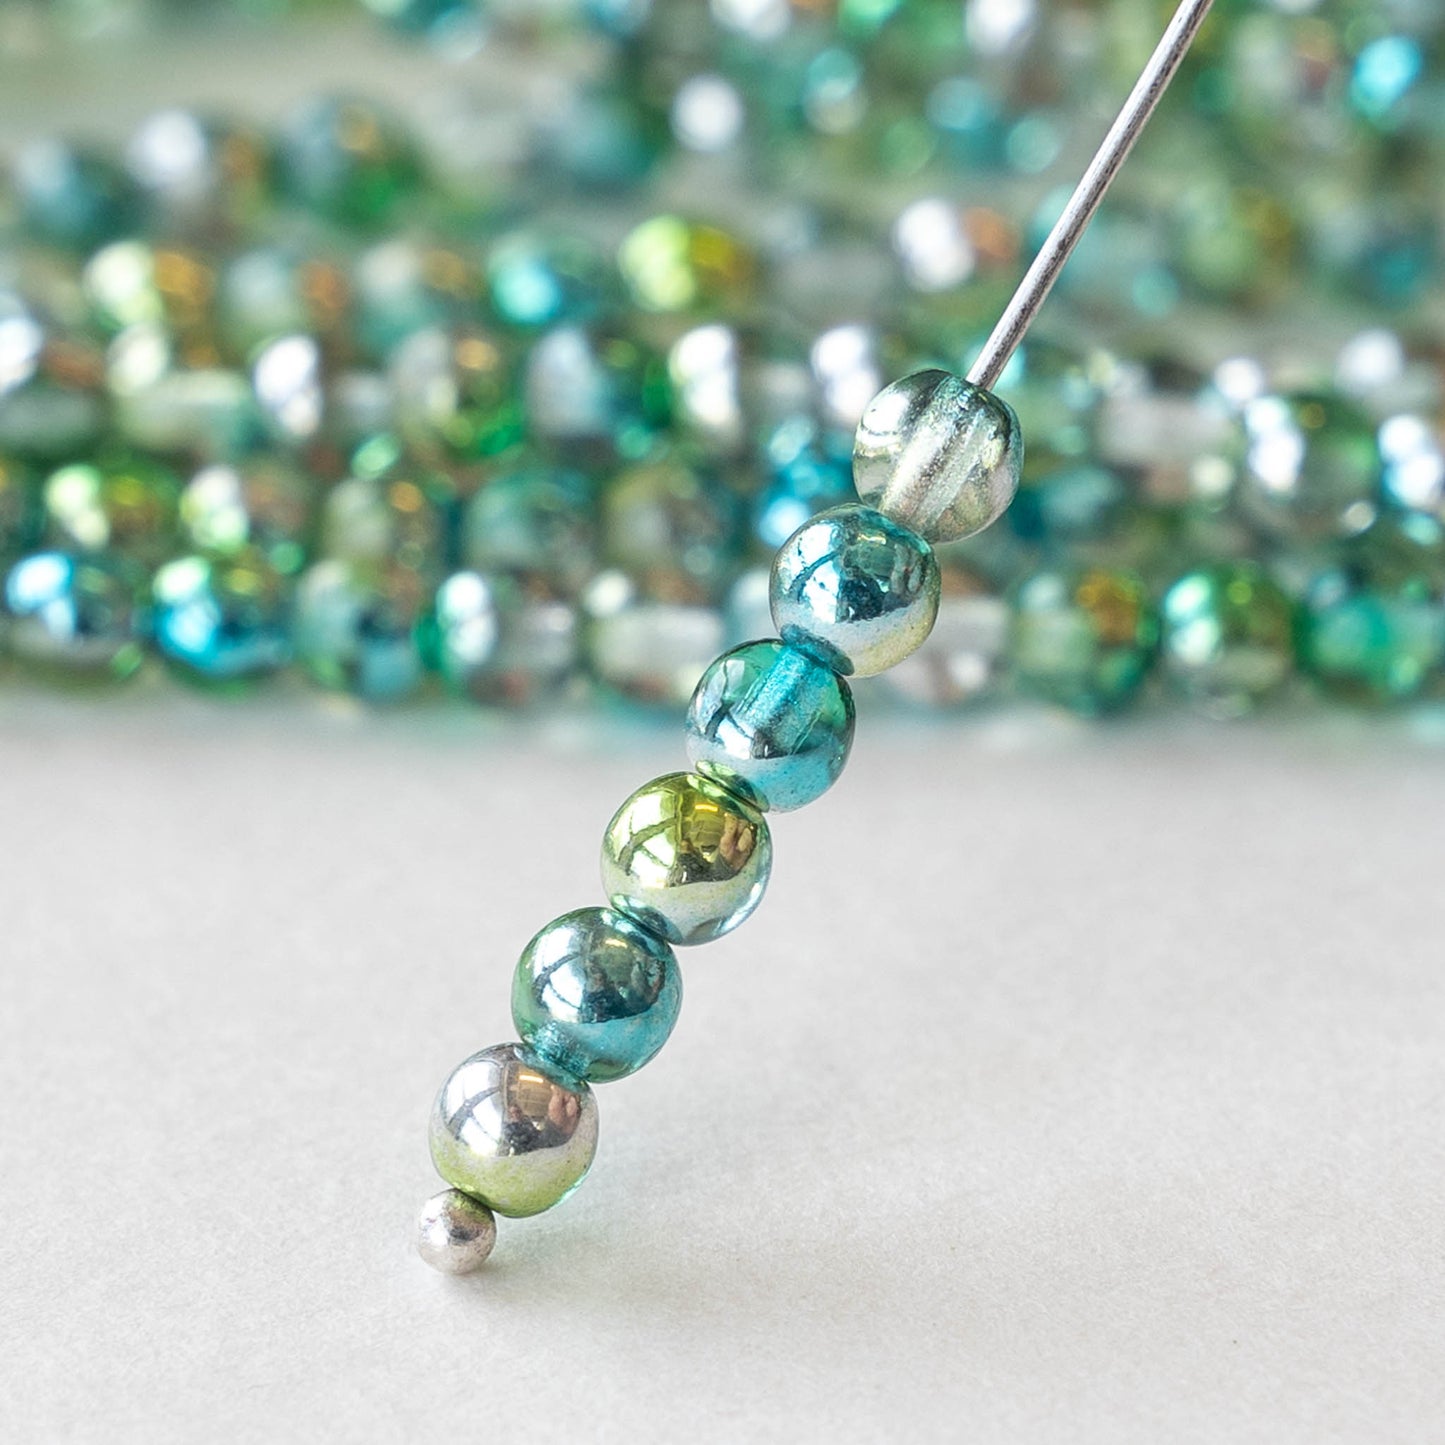 4mm Round Glass Beads - Laguna Celestial Green - 50 Beads